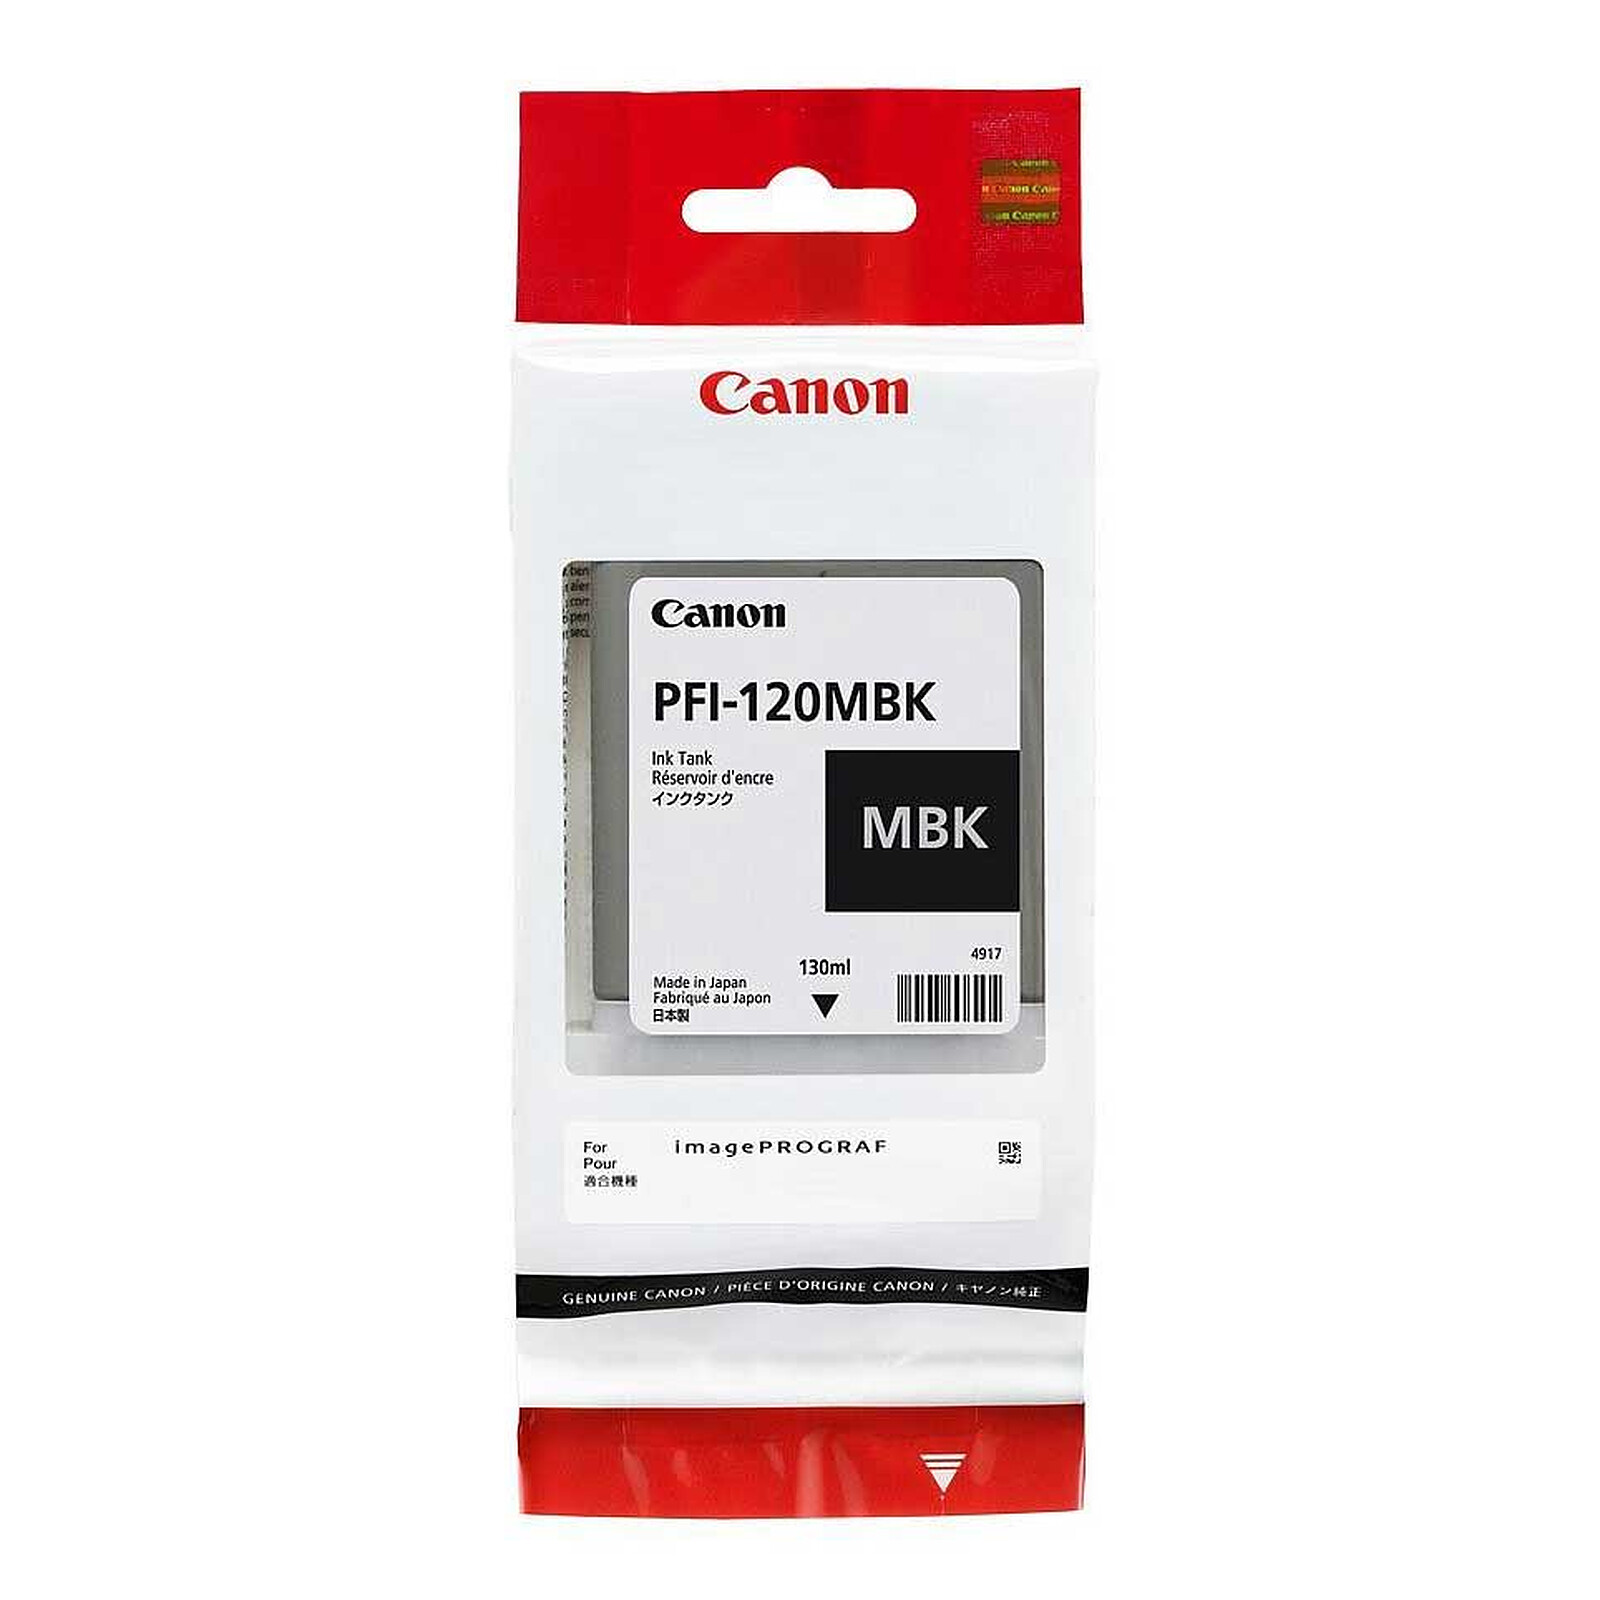 Canon PFI-120 MBK Printer cartridge LDLC